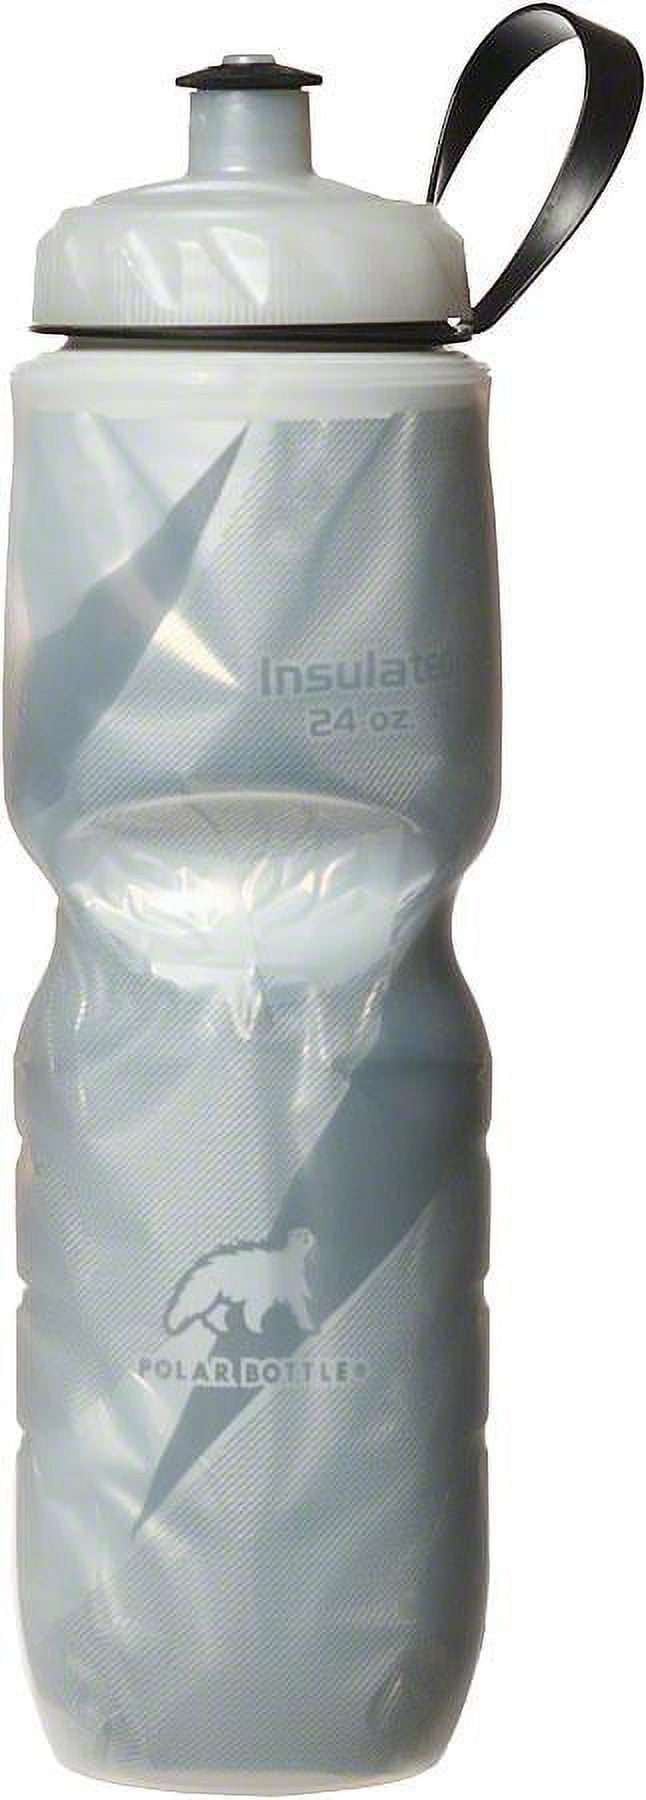 Polar Bottle Sport Insulated 24 oz Water Bottle - Spin Bermuda - Bed Bath &  Beyond - 16179436